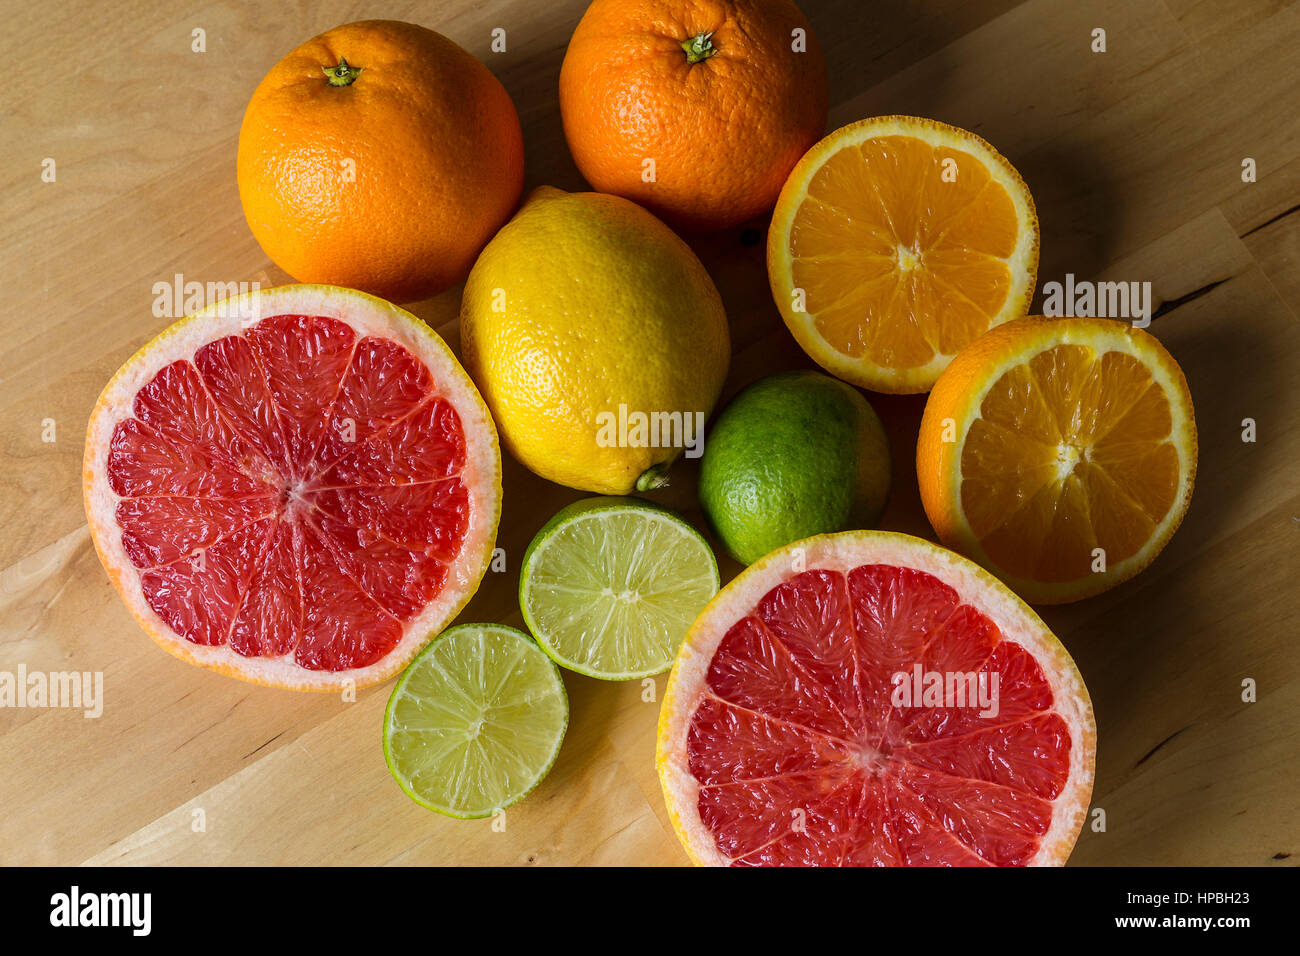 Citrus Stock Photo